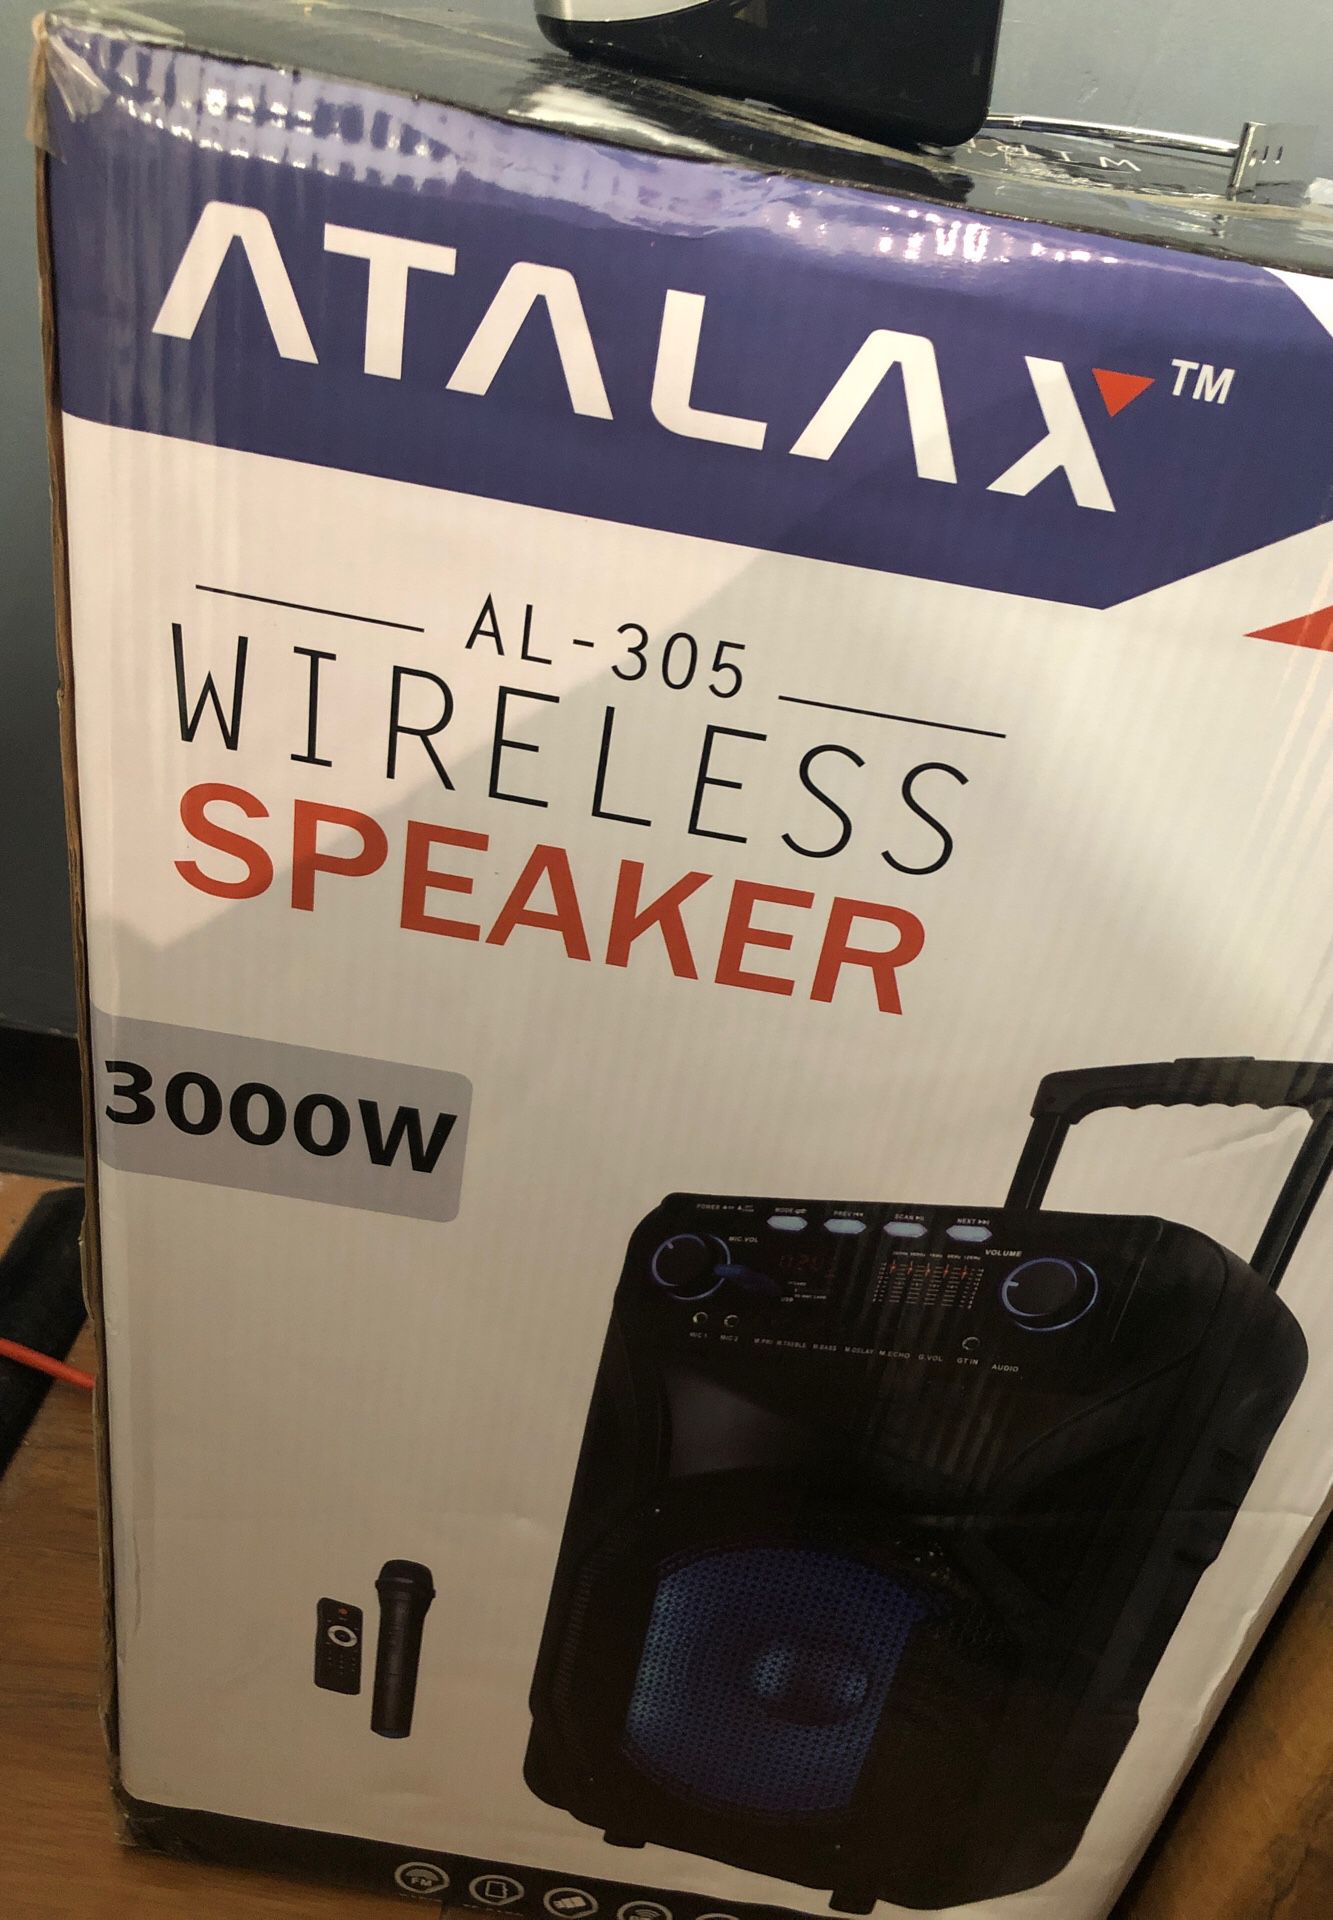 3000 Watt speaker